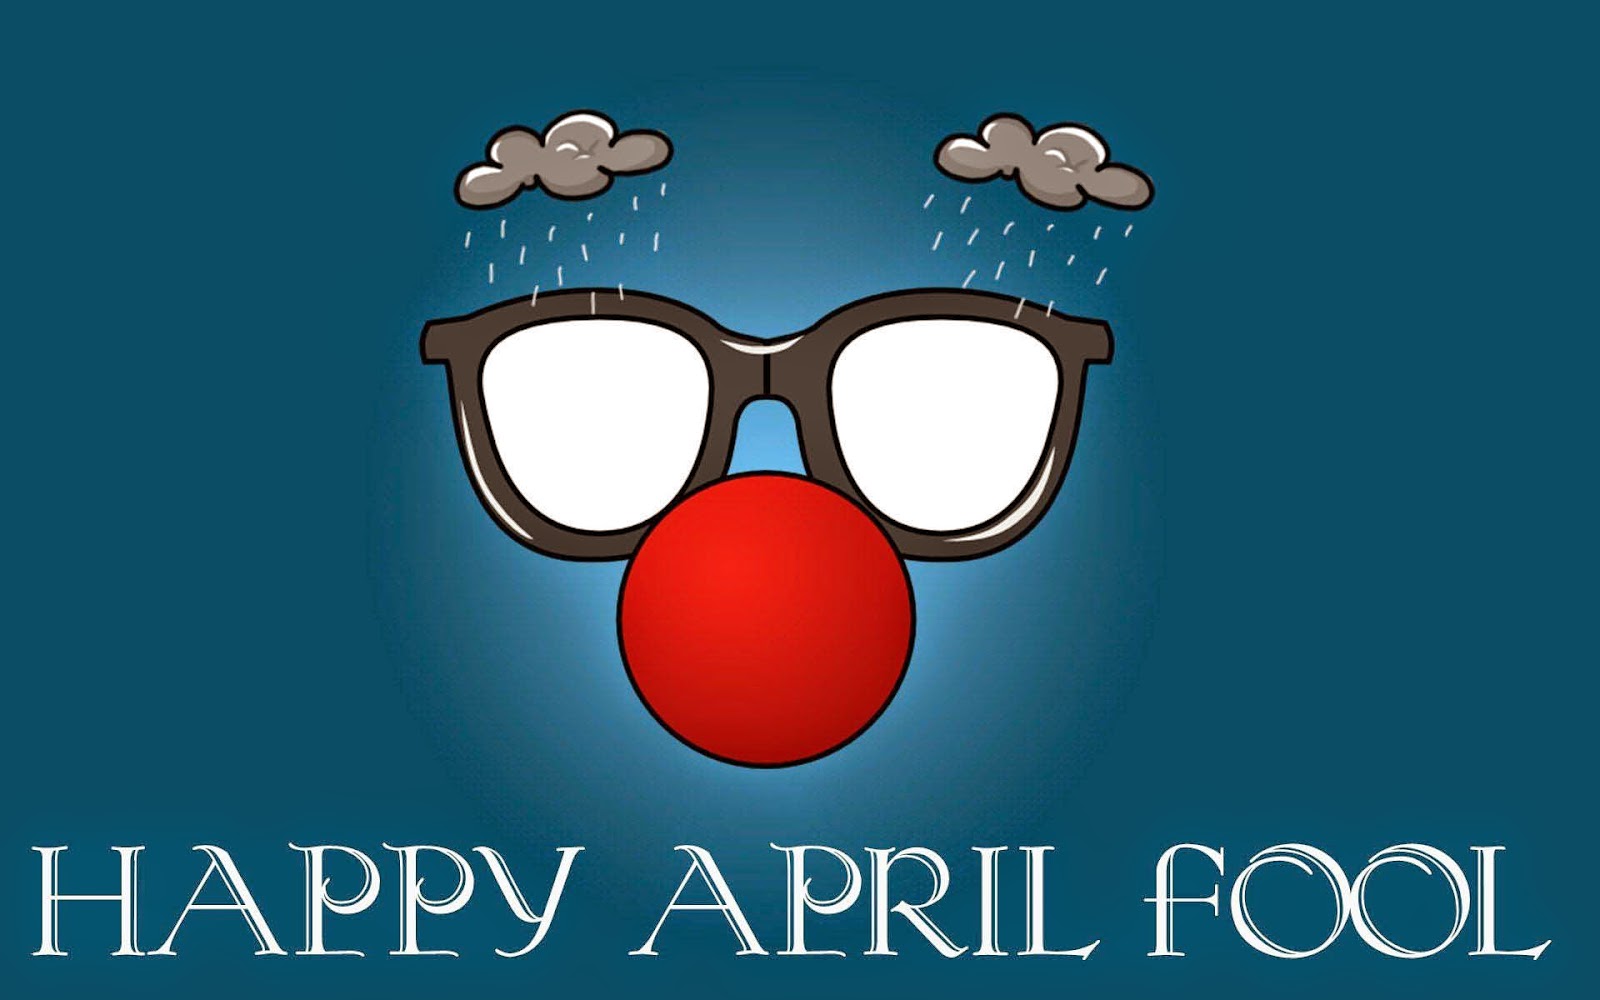 http://www.websiteboyz.com/april-fools-day-wallpapers-best-wallpapers-for-1st-april-hd-wallpapers-for-all-fools-day.html